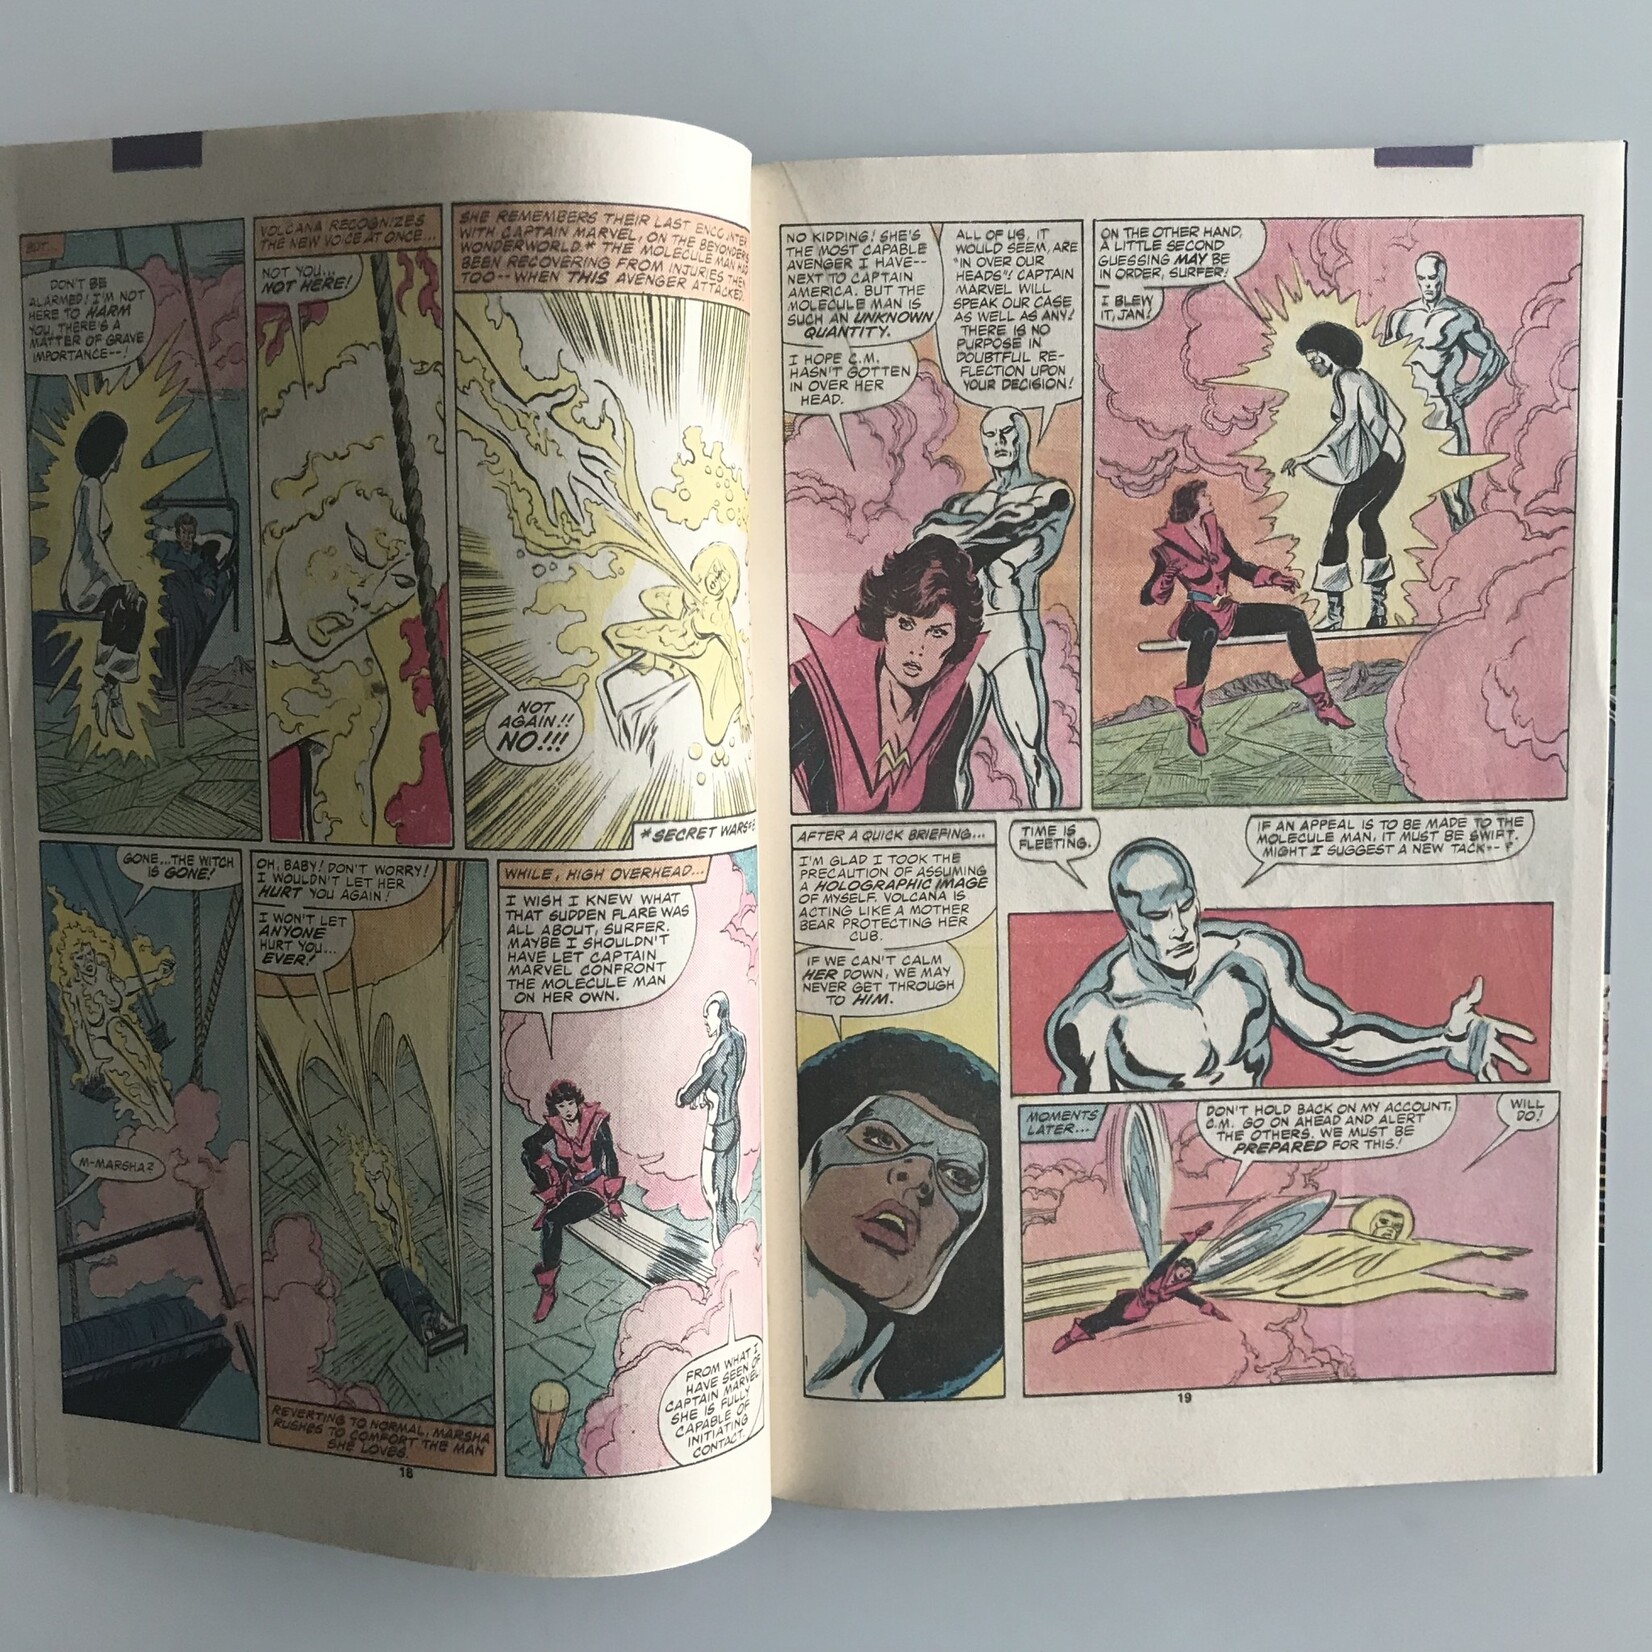 Avengers - Vol. 1 #266 April 1986 - Comic Book